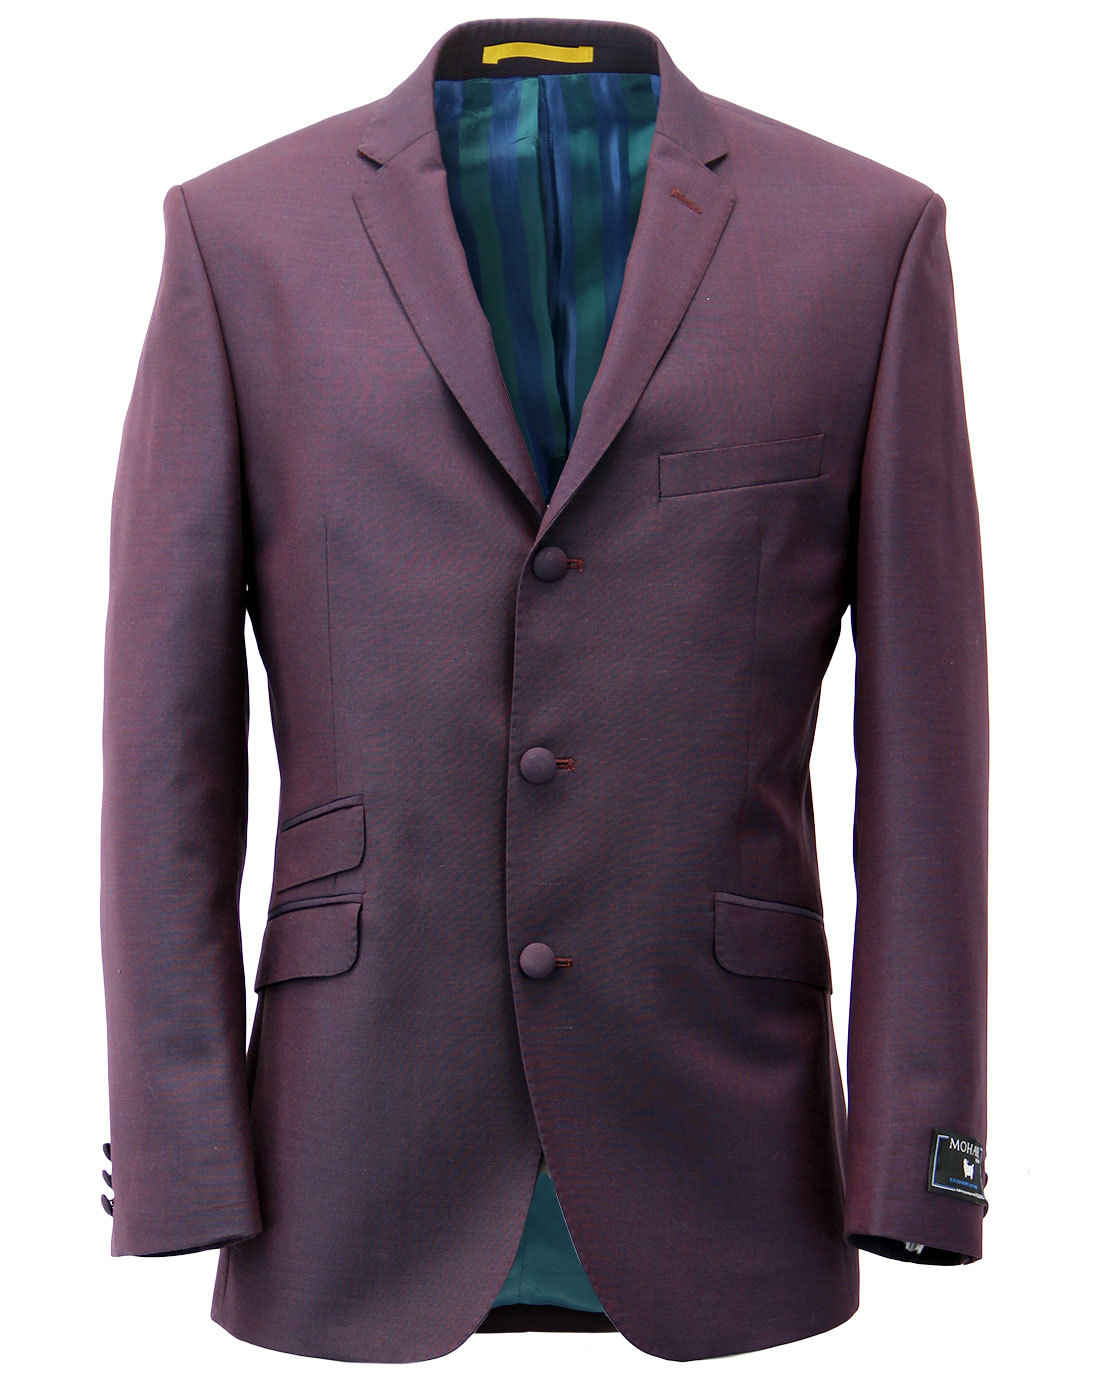 Retro 1960s Mod Mohair Blend 3 Button Suit Jacket in Burgundy